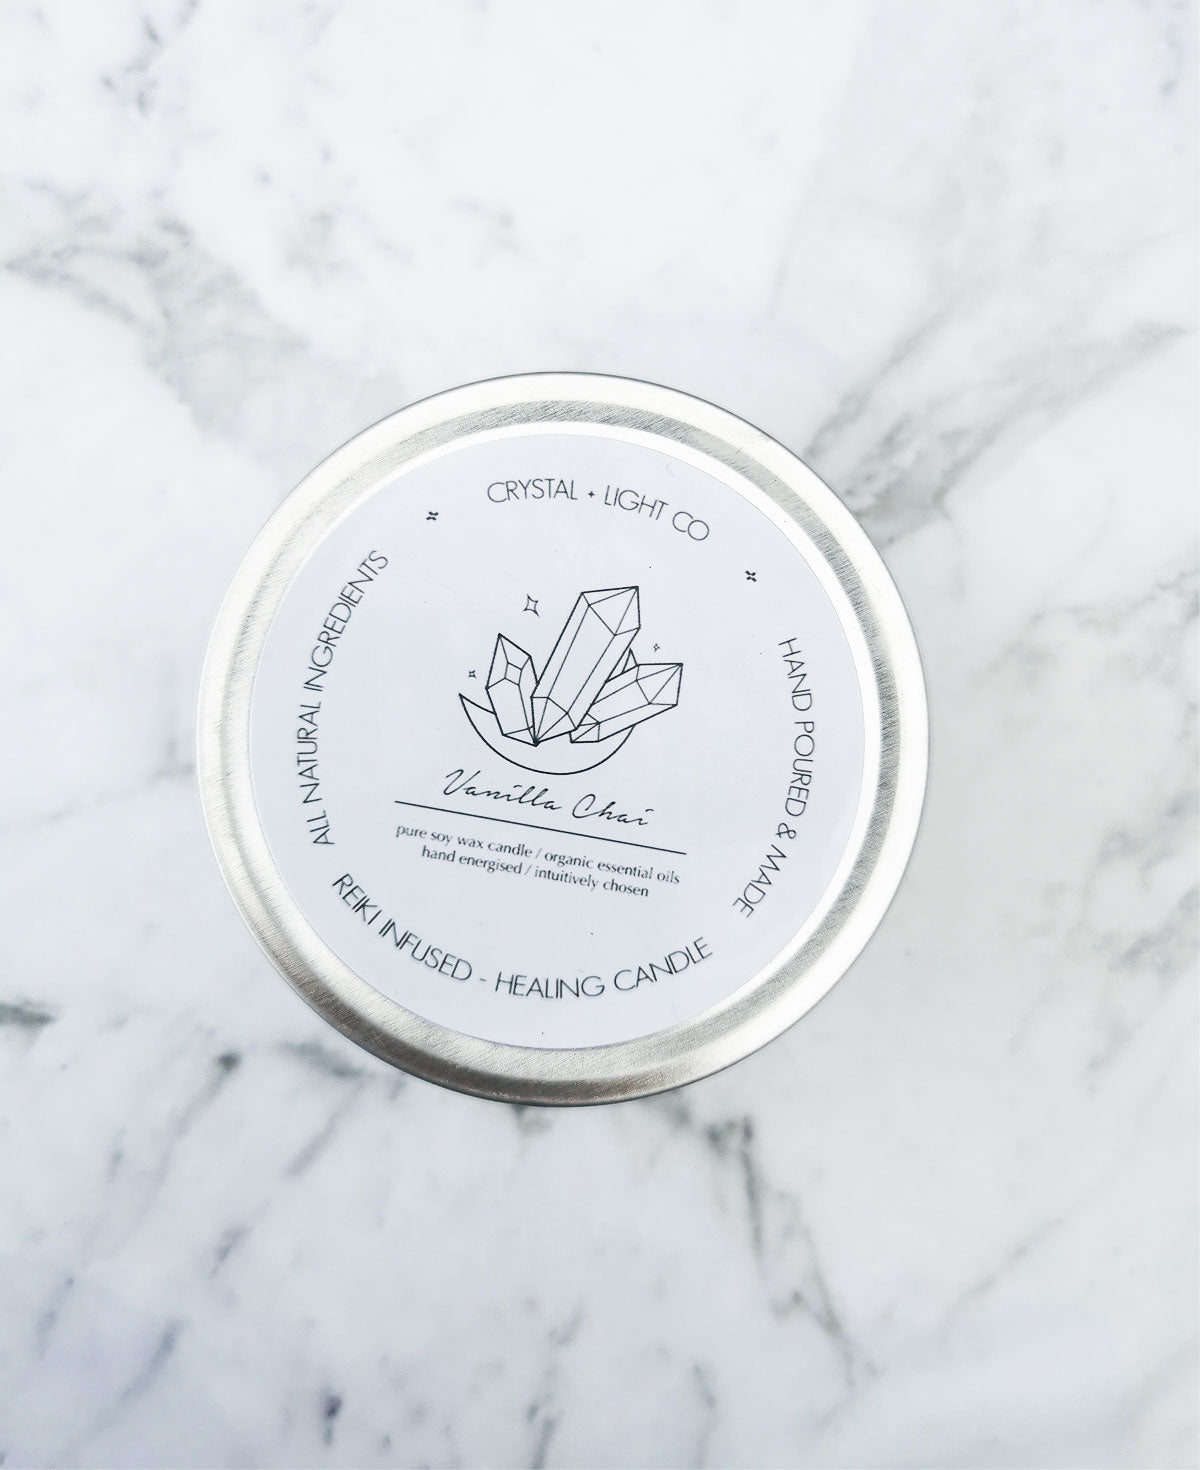 Vanilla Chai- Fragrance Healing candle